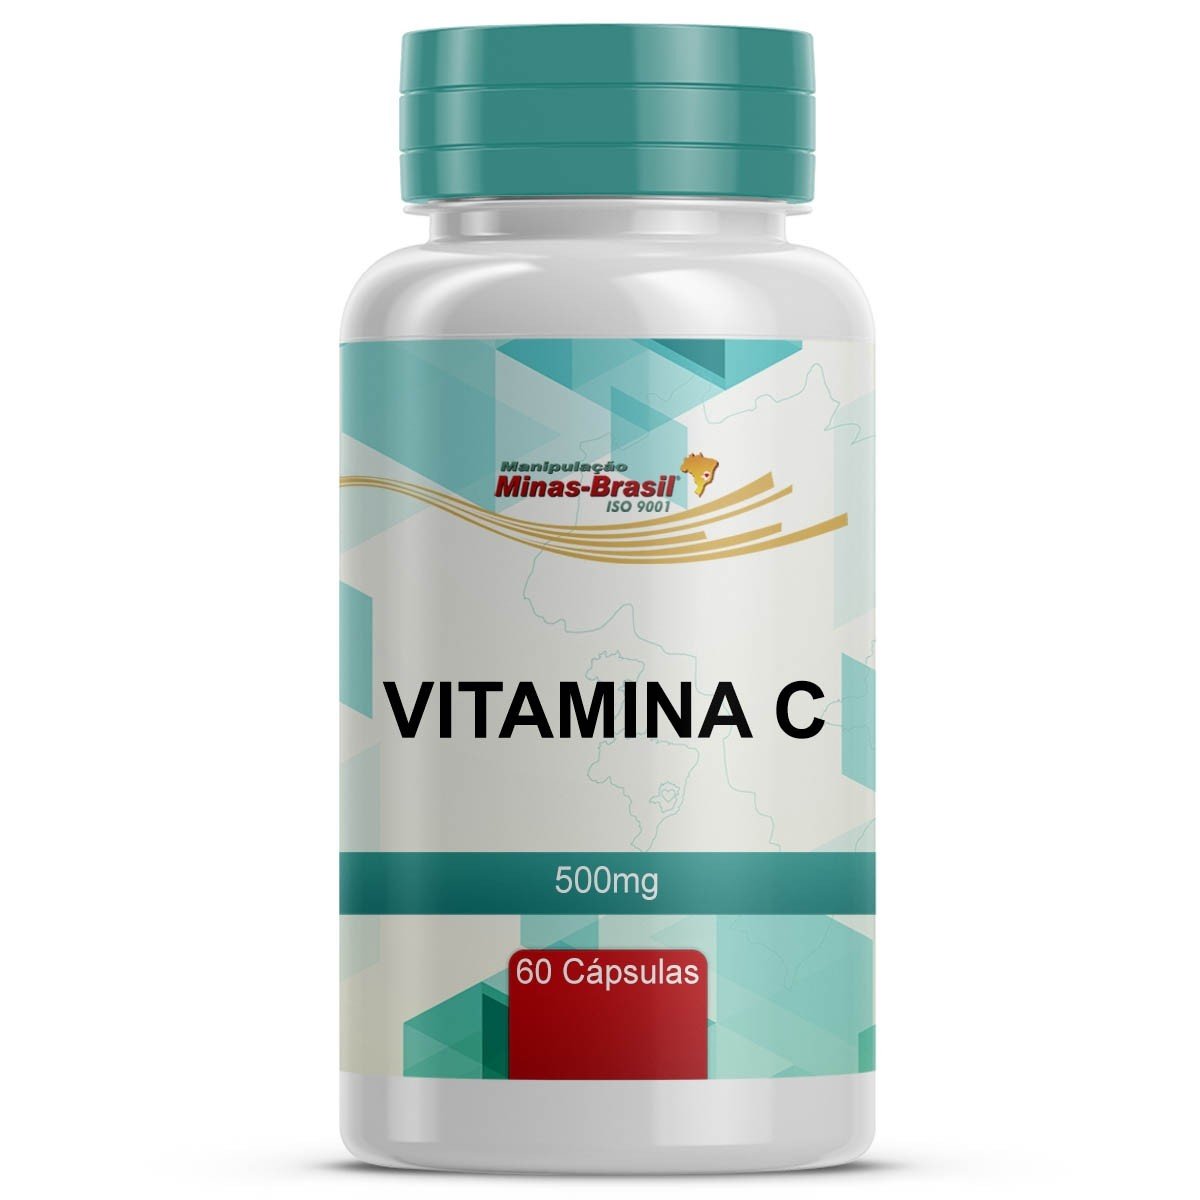 https://www.drogariaminasbrasil.com.br/media/product/da9/vitamina-c-500mg-60-capsulas-manipulado-d4d.jpg